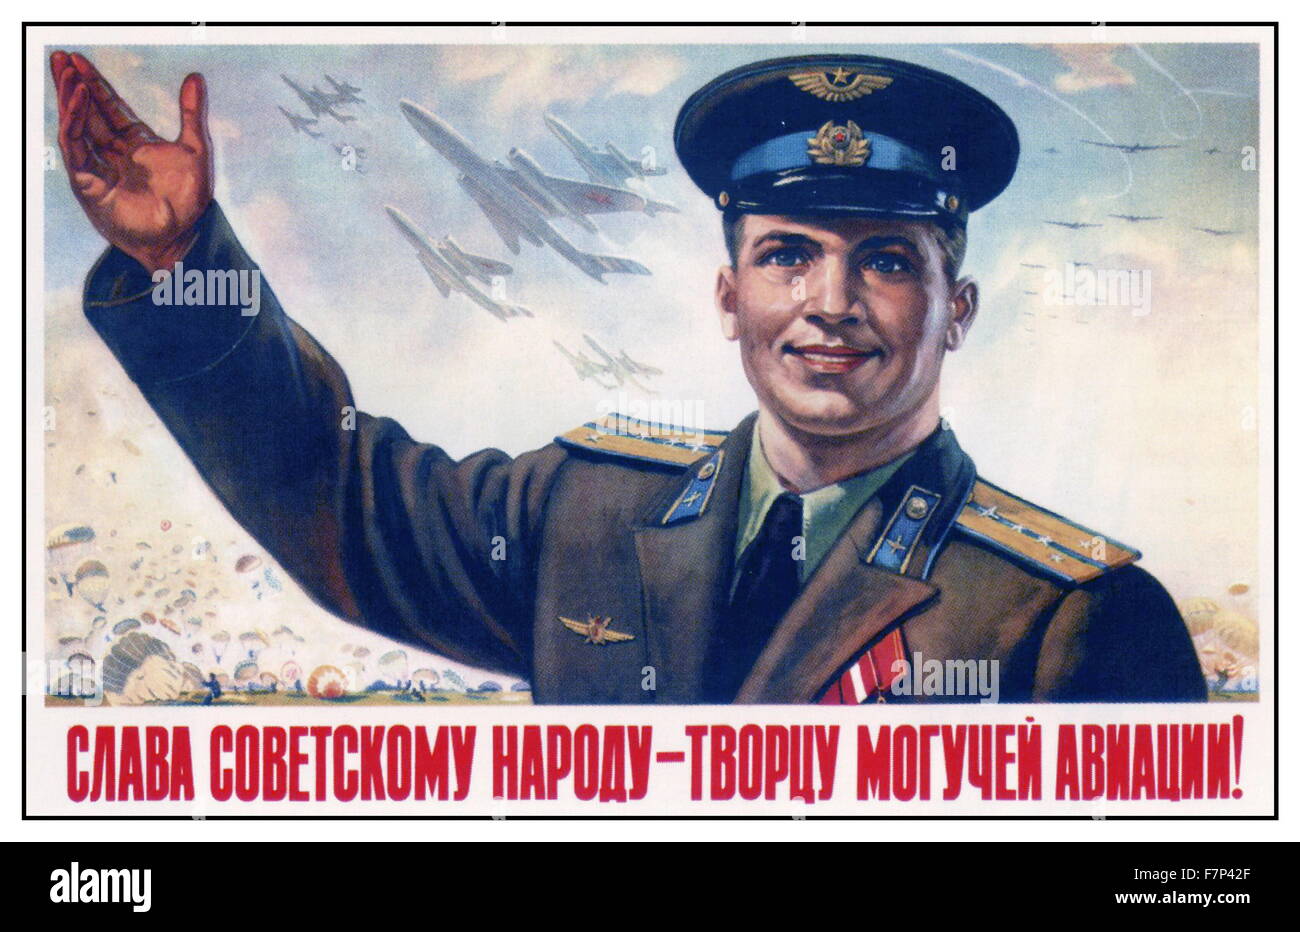 Soviet Union propaganda poster. Dated 1954 Stock Photo